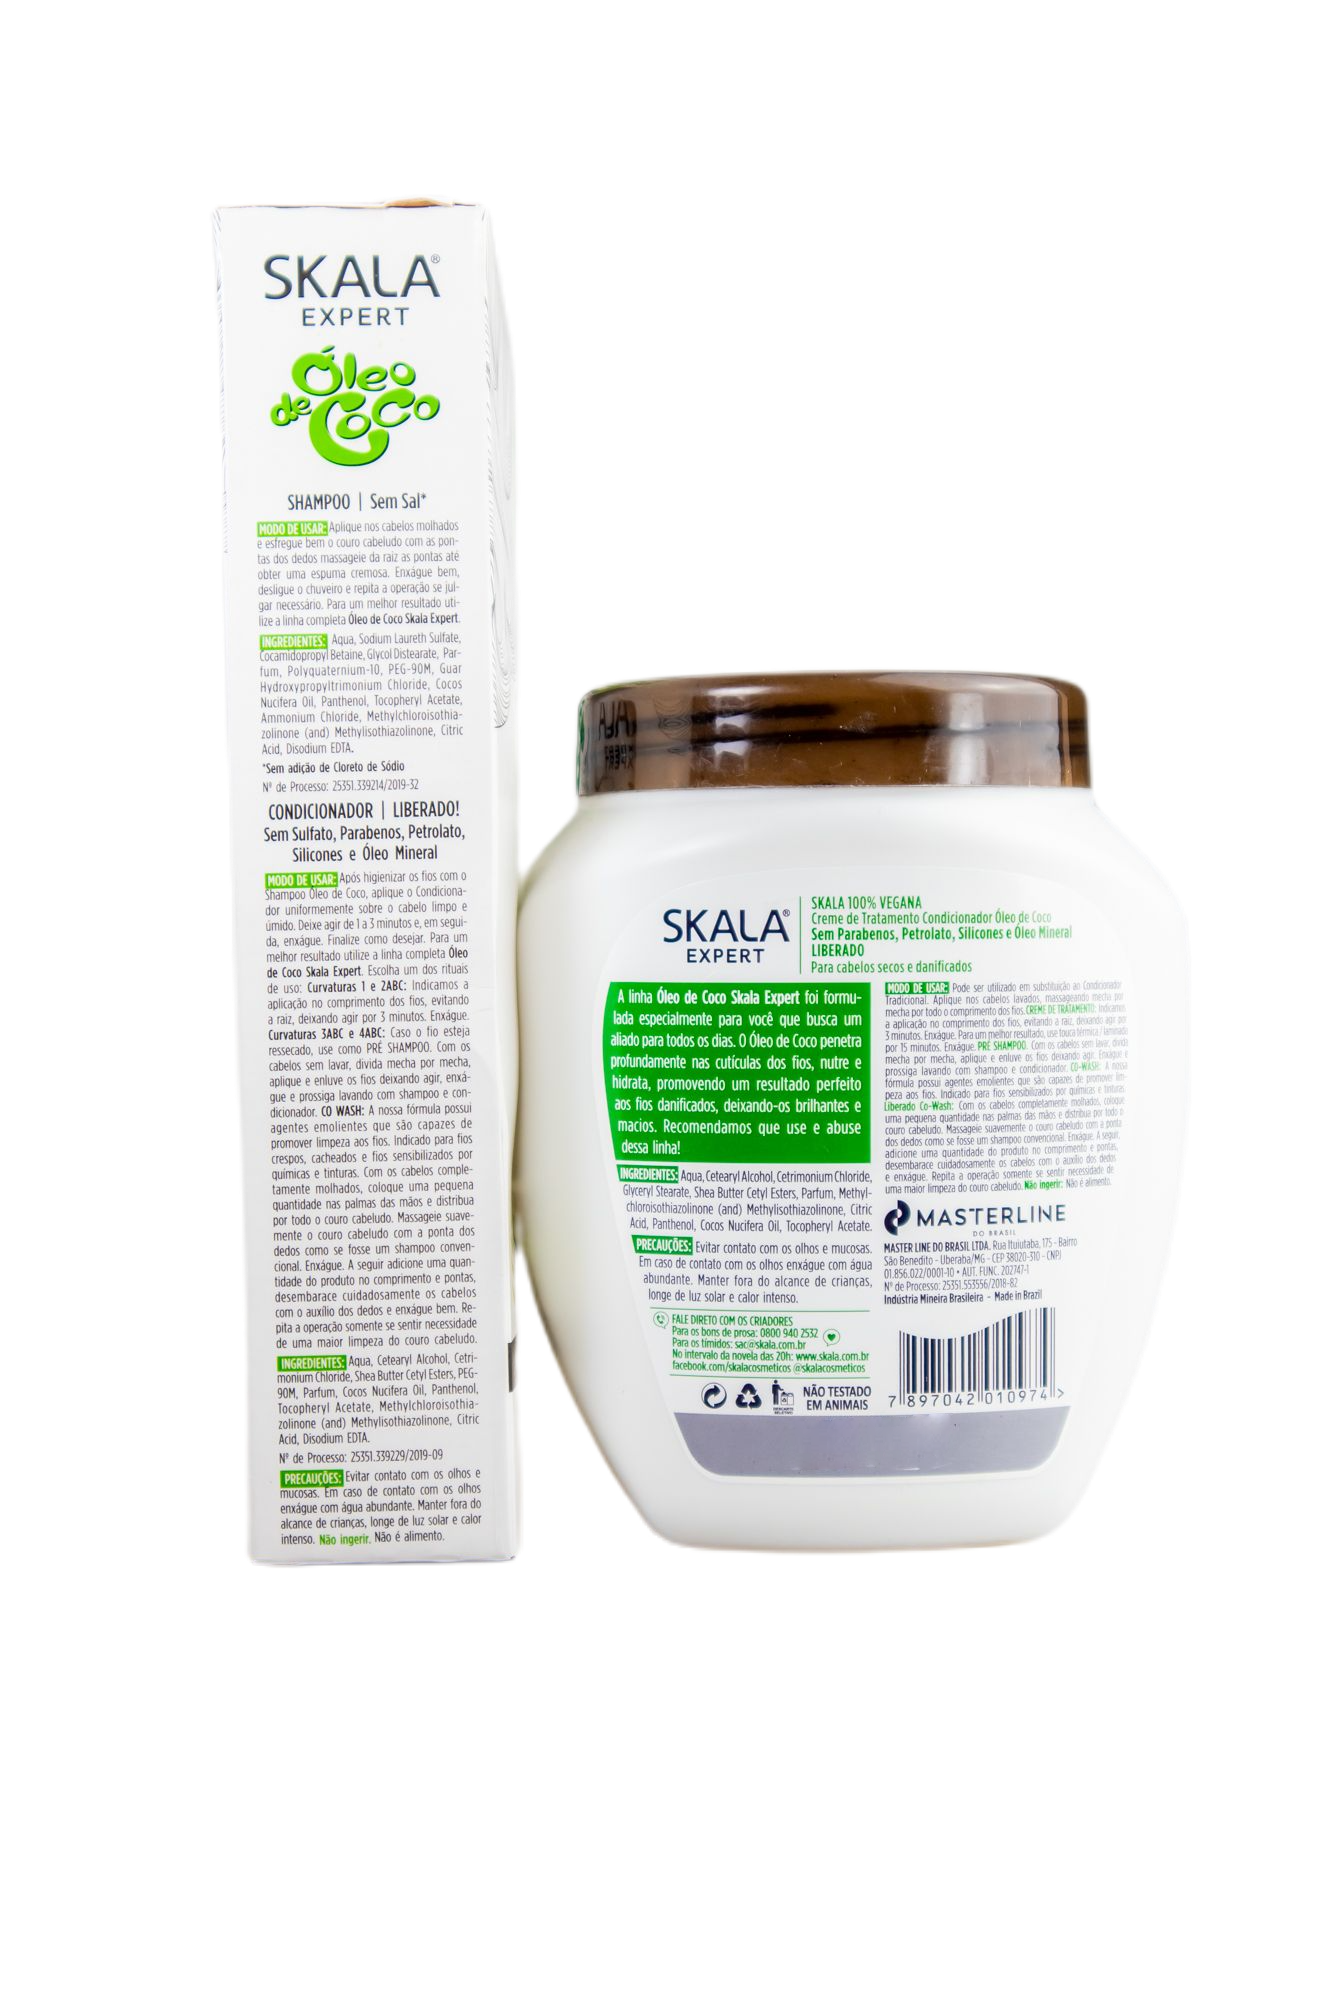 Skala Home Care Skala Expert Oleo de Coco Coconut Oil Damaged Hair Nourishing Moisturising Kit 3 Products - Skala